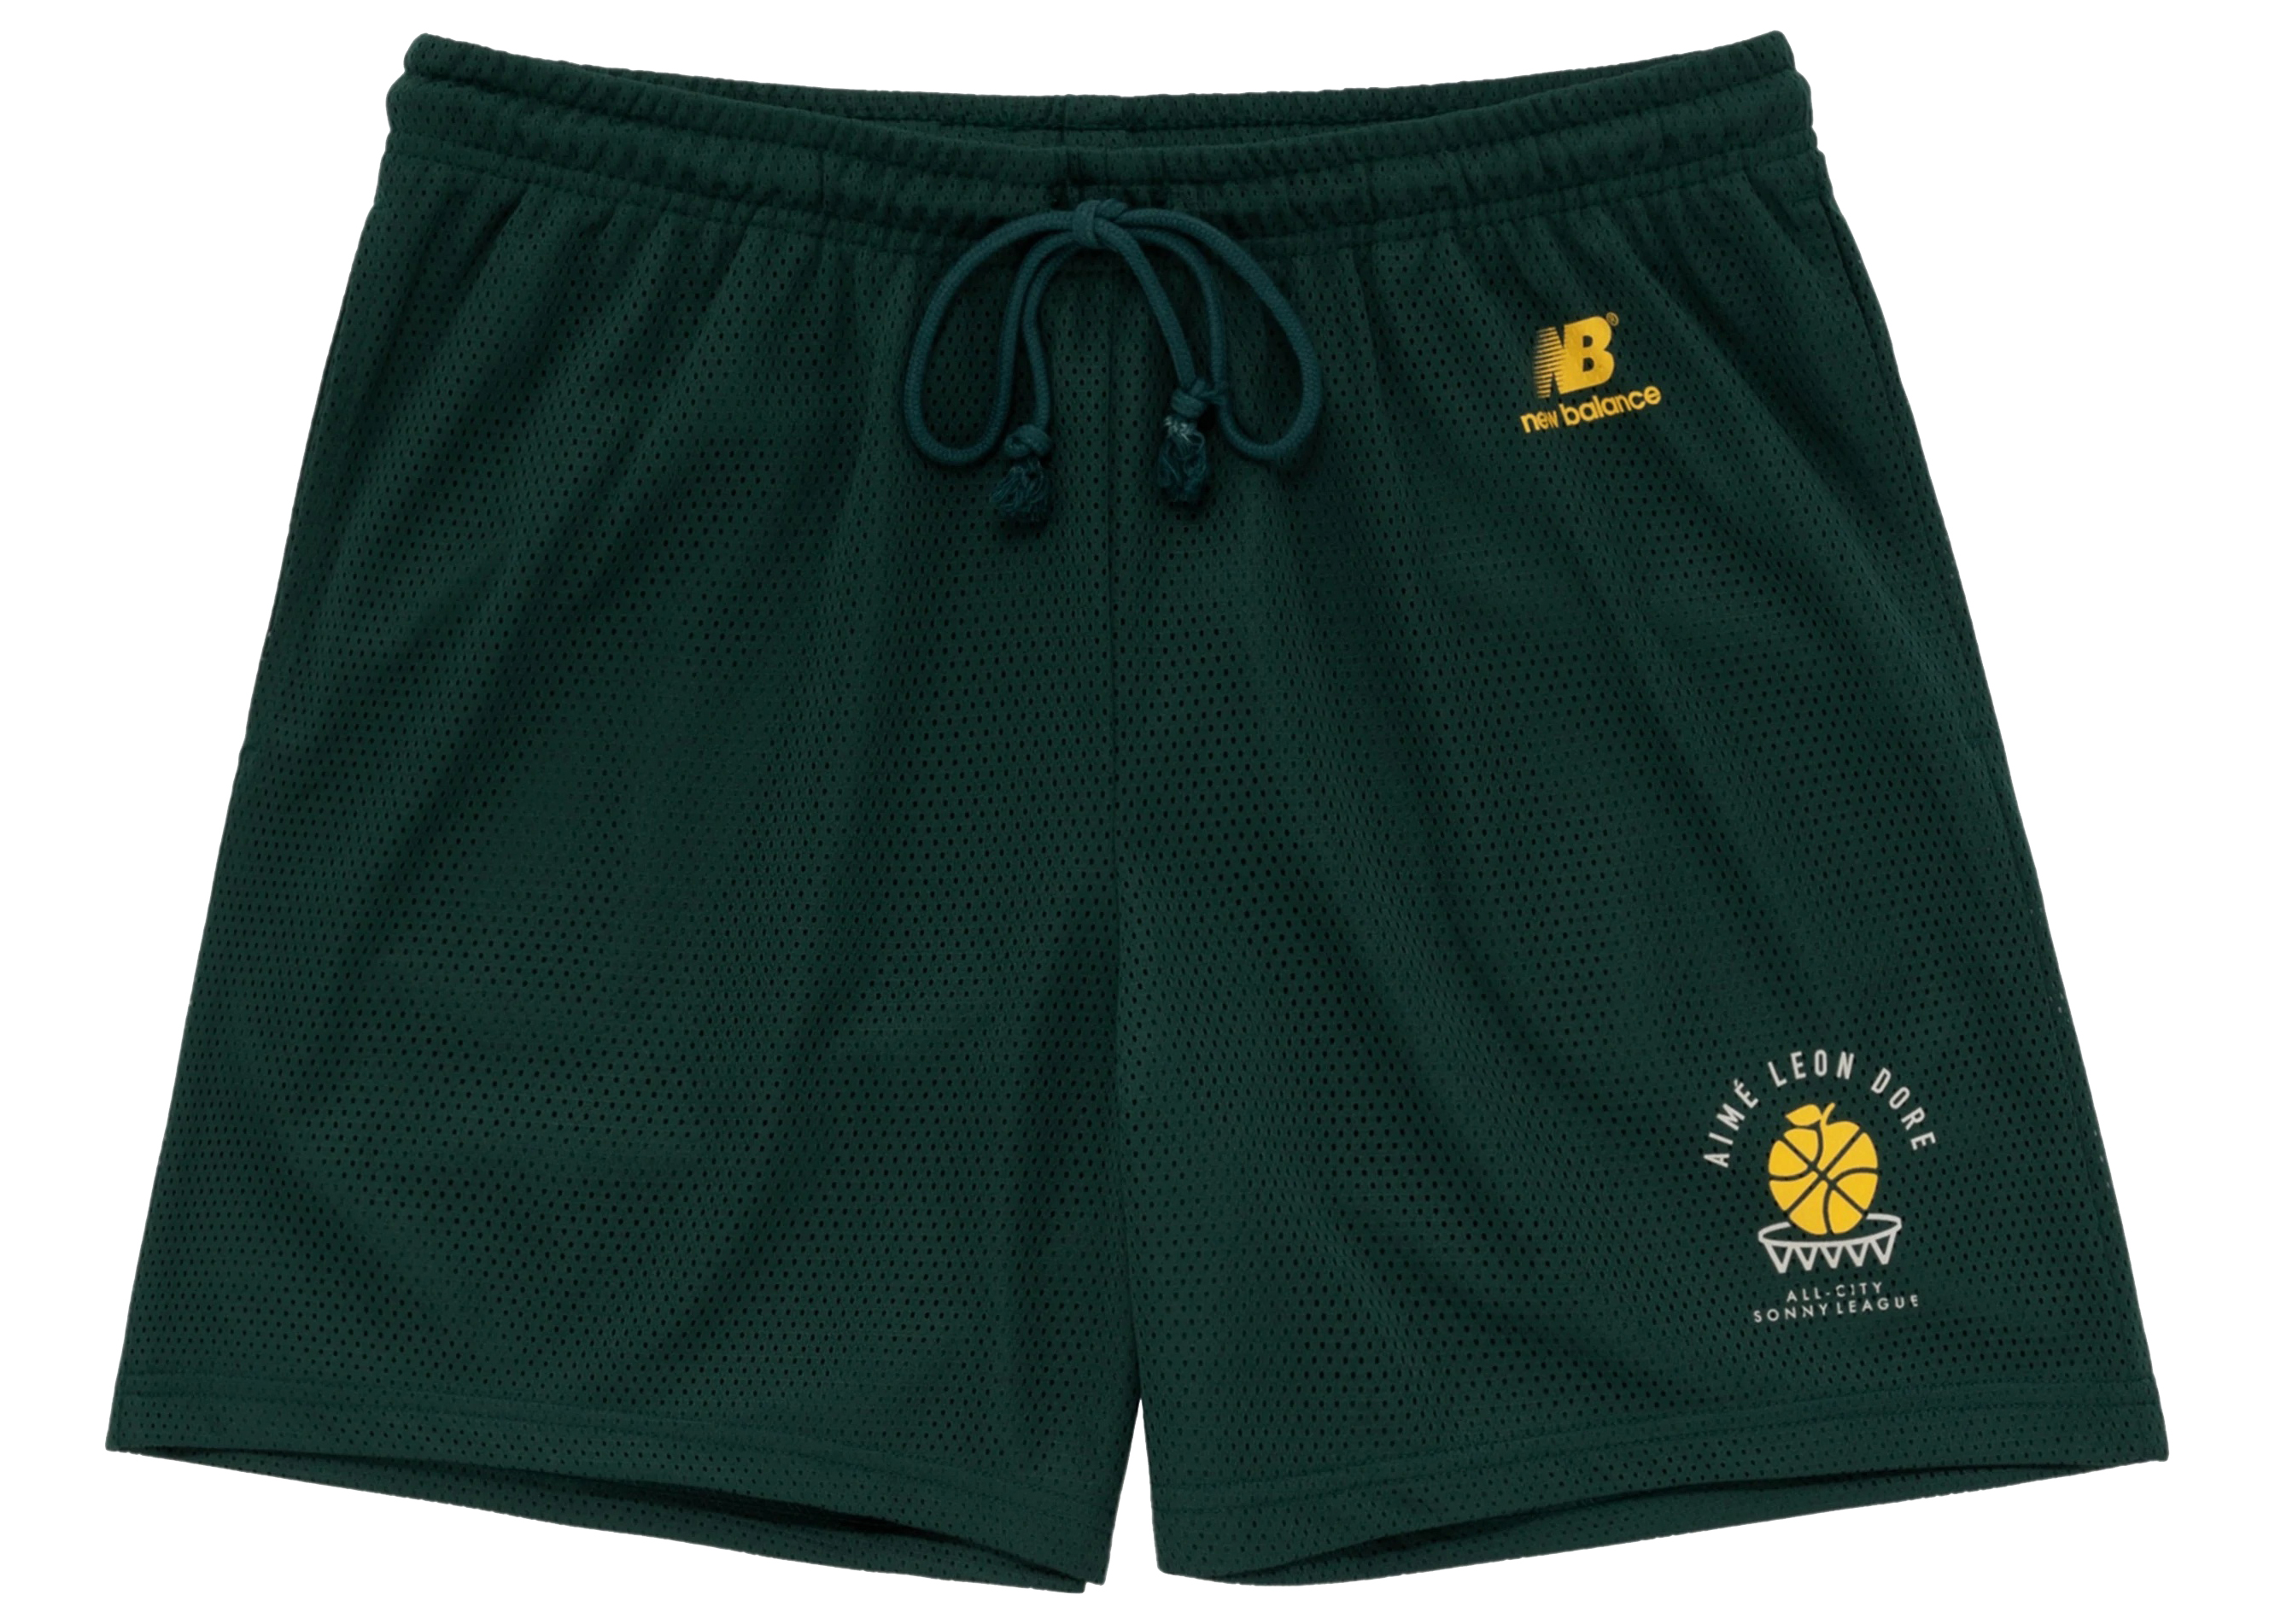 Aime Leon Dore x New Balance SONNY League Gym Shorts Green Men's 